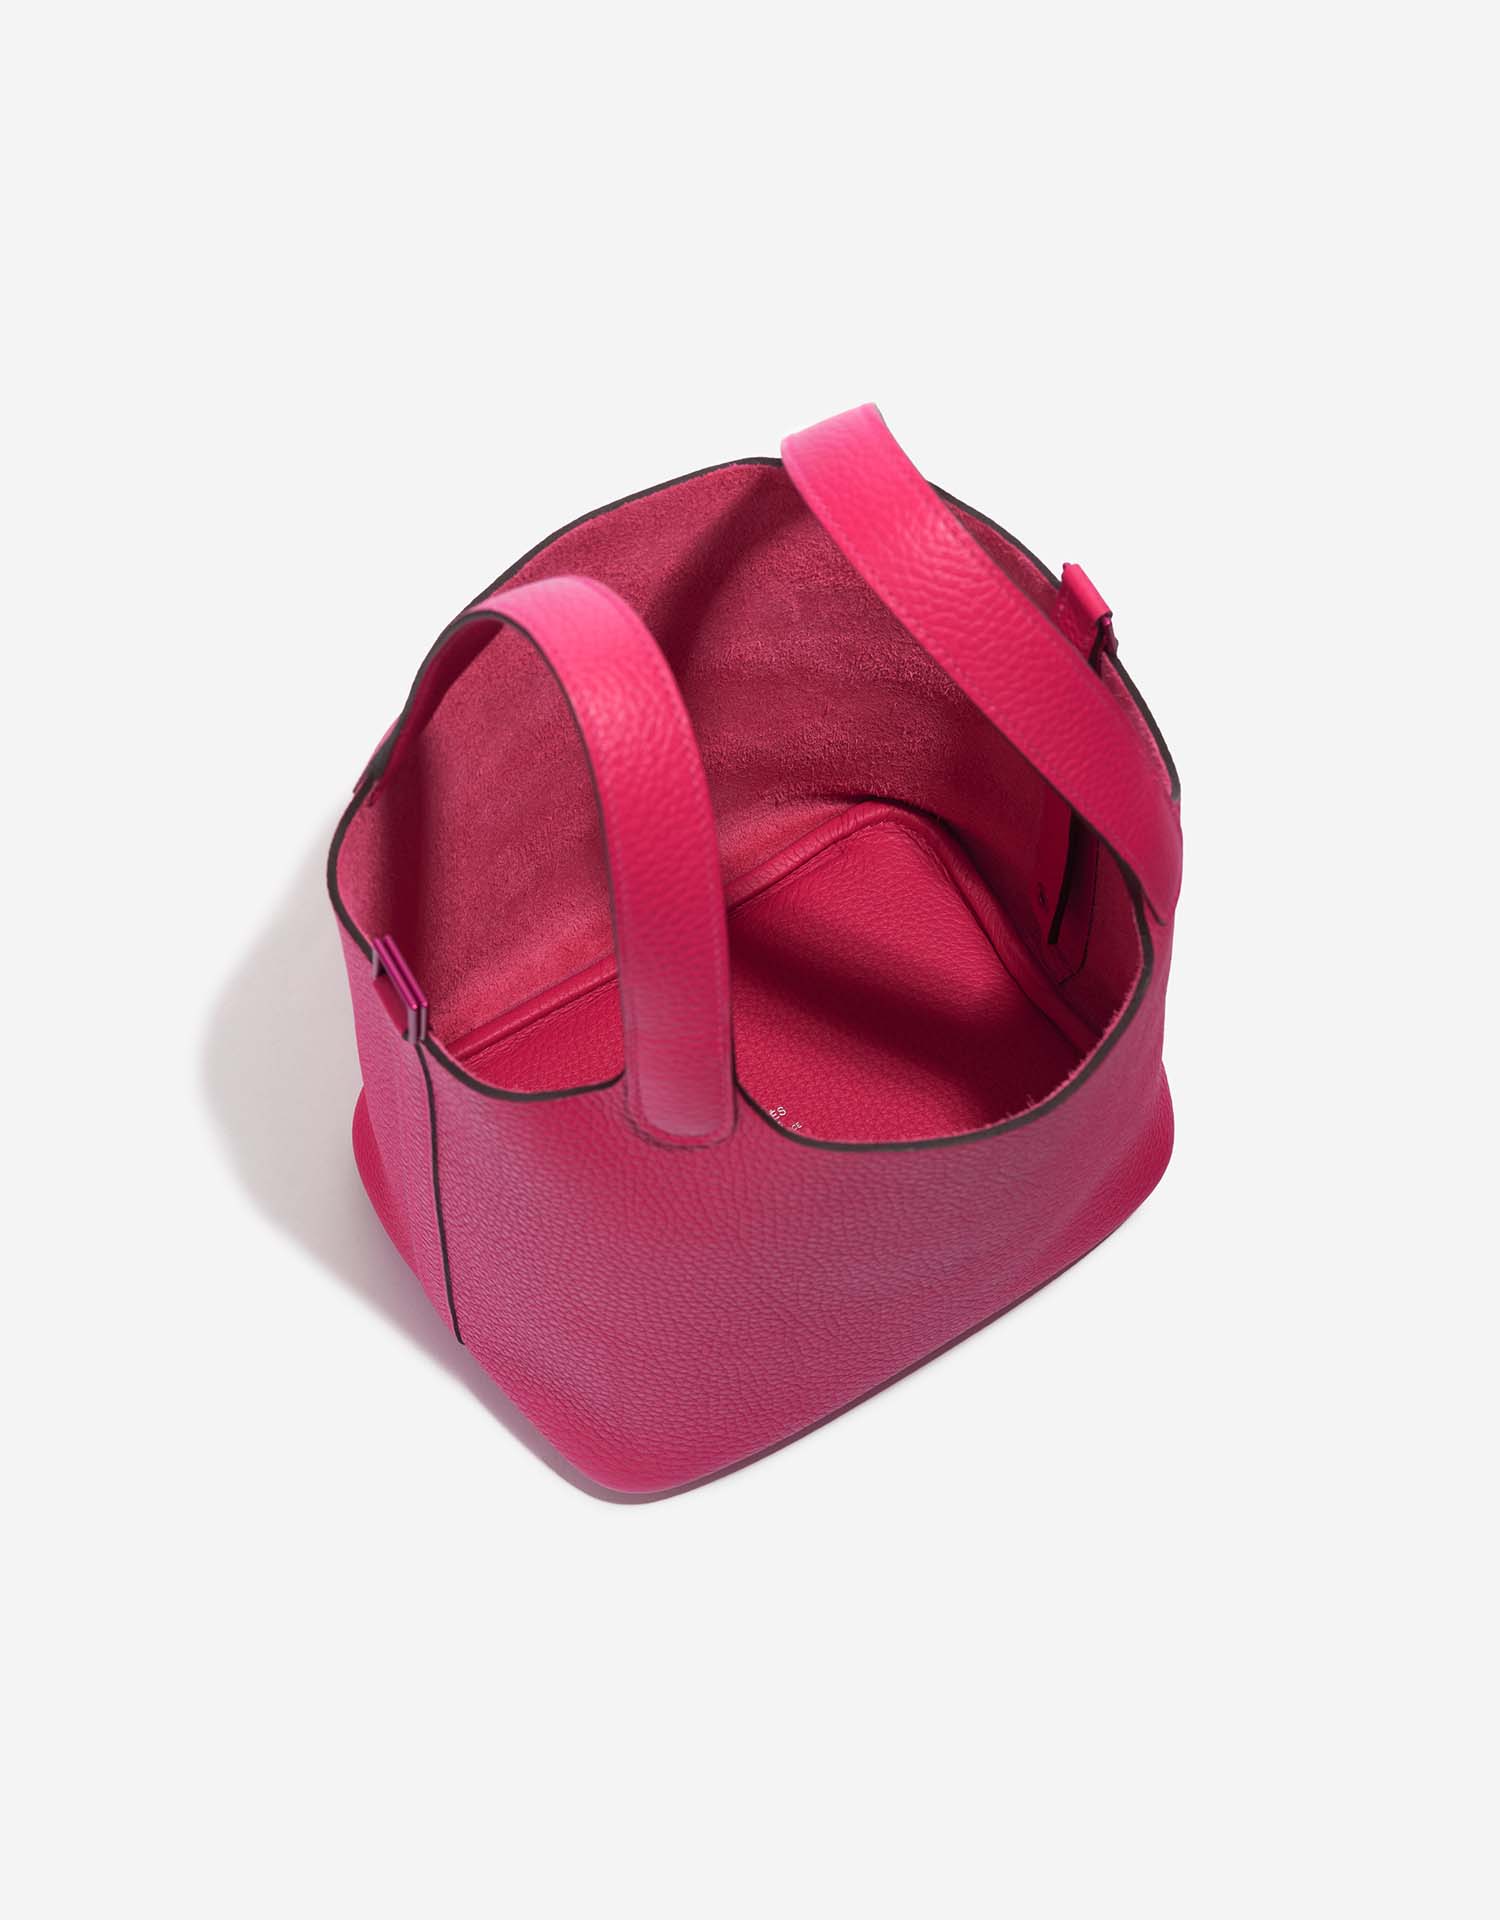 Hermès Picotin 18 RoseMexico Inside  | Sell your designer bag on Saclab.com